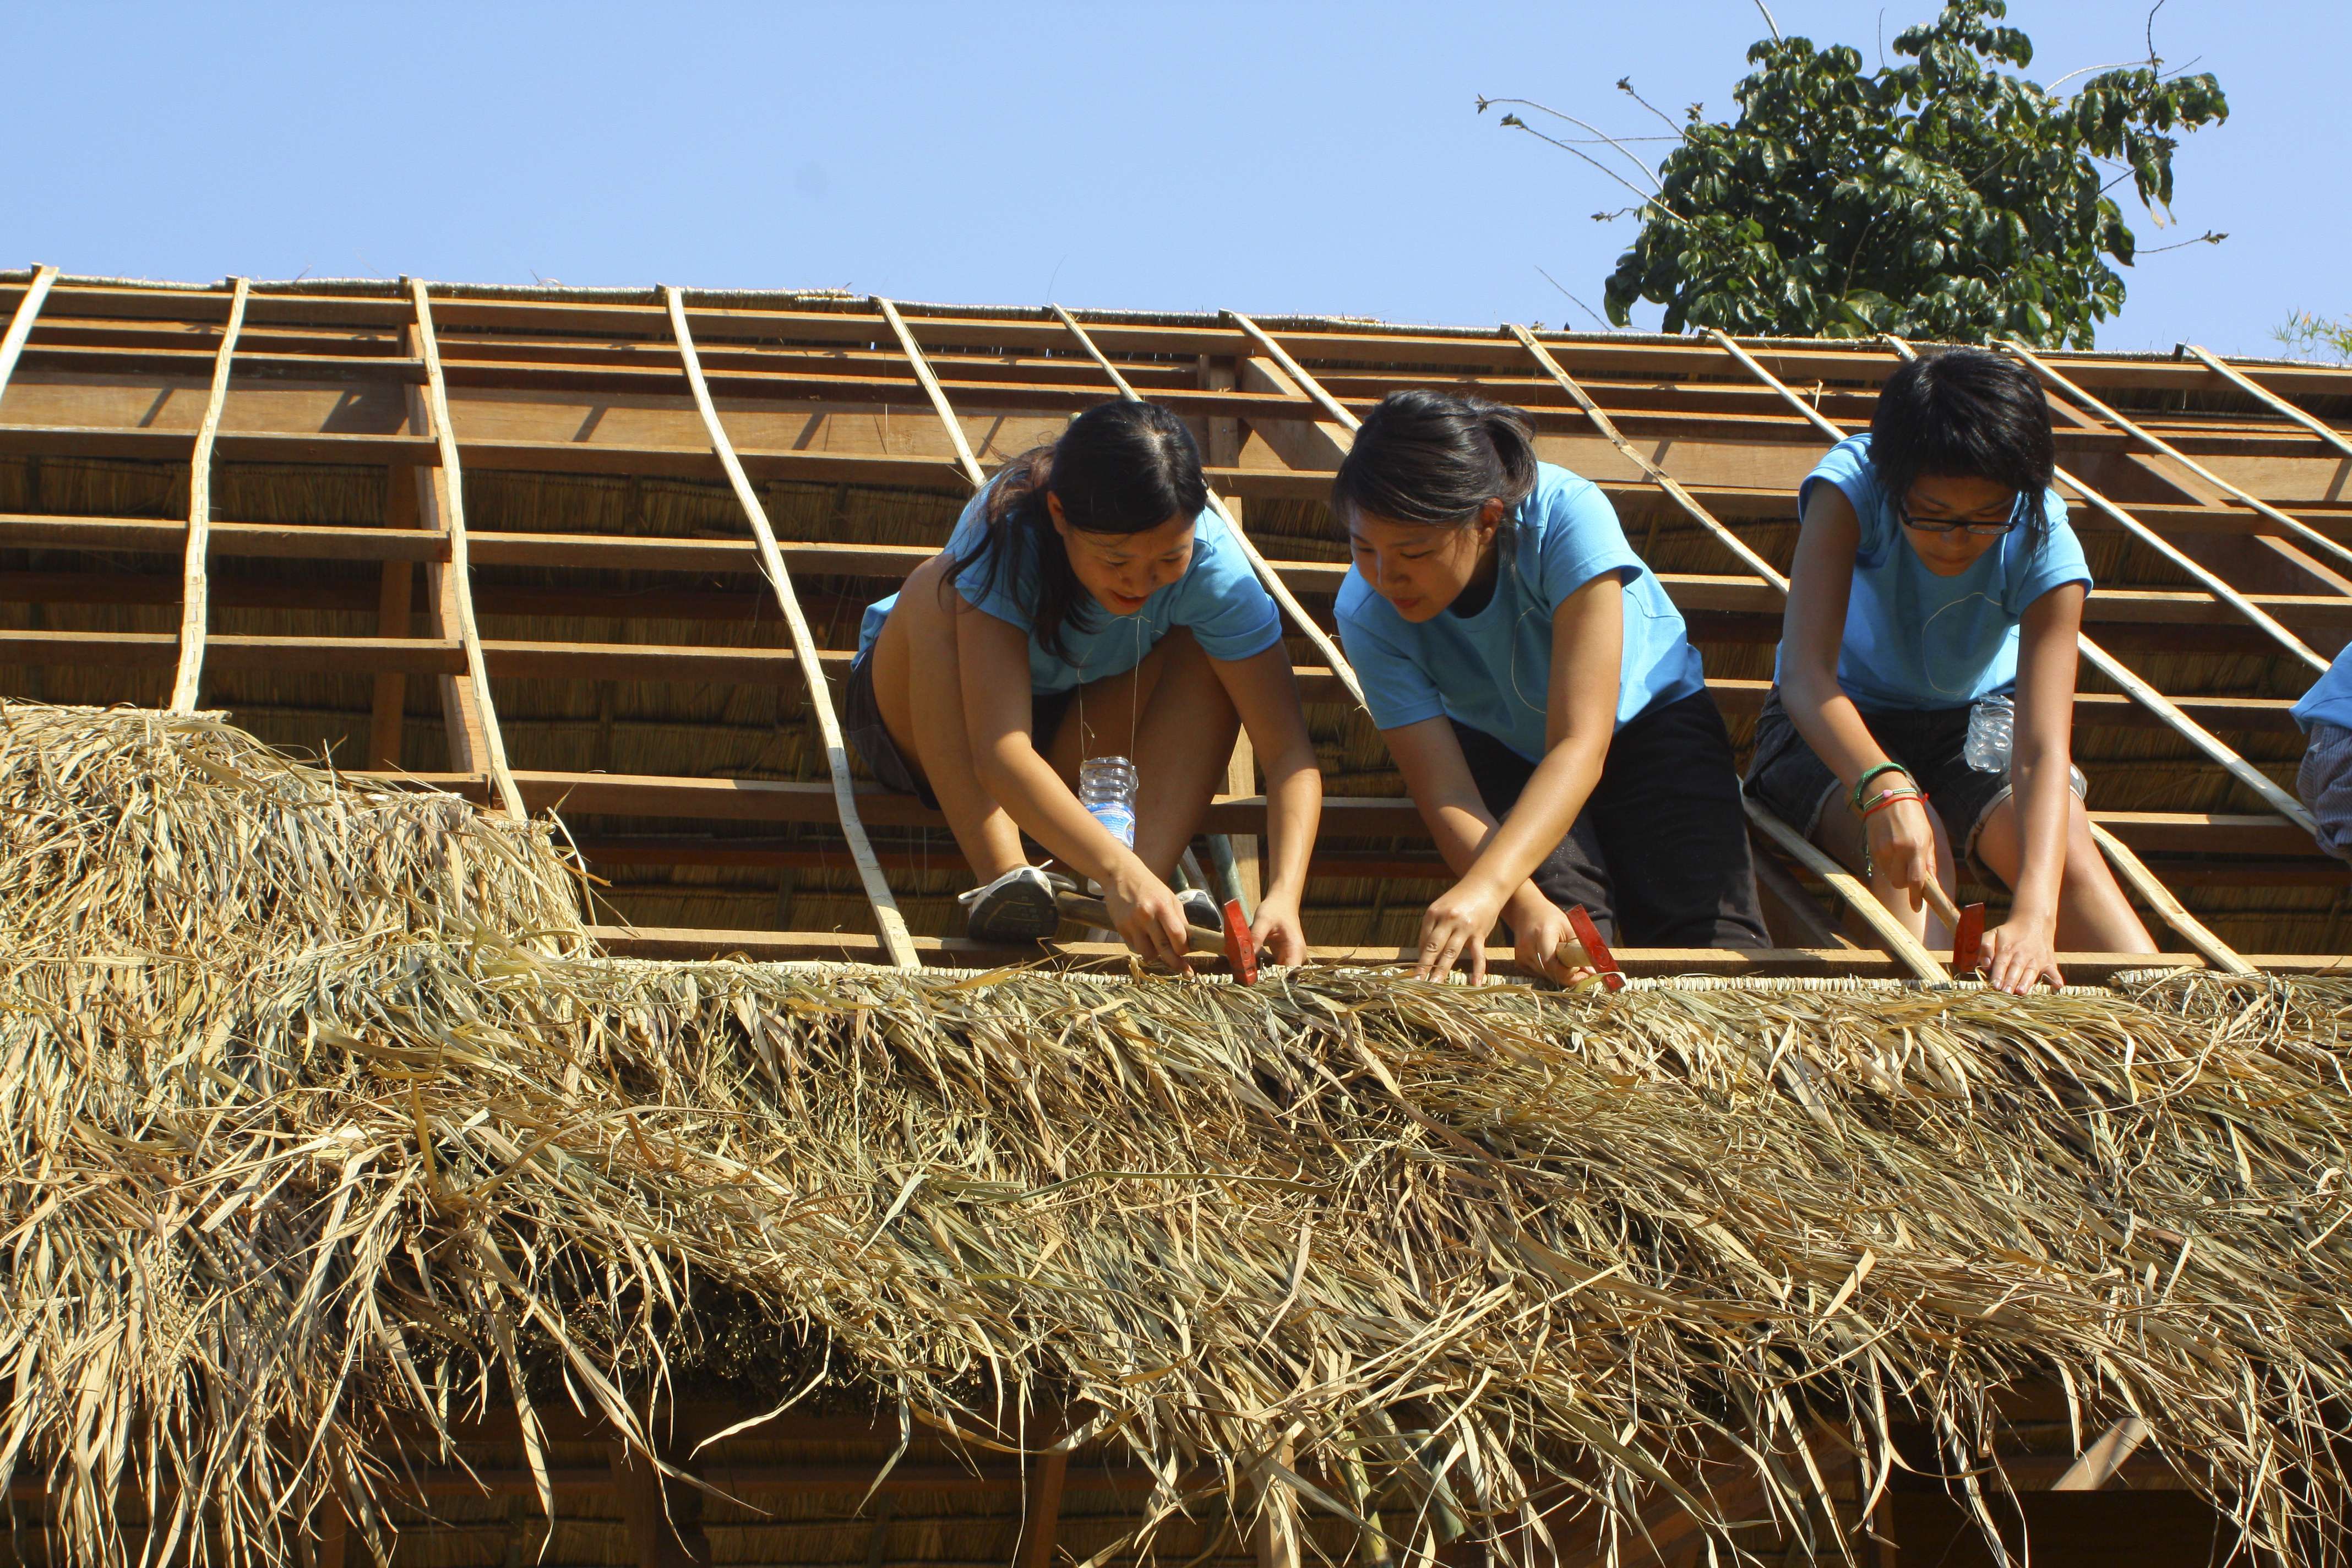 Project Little Dream volunteers help to build a school in Prey Run village, Cambodia, for 150 children.